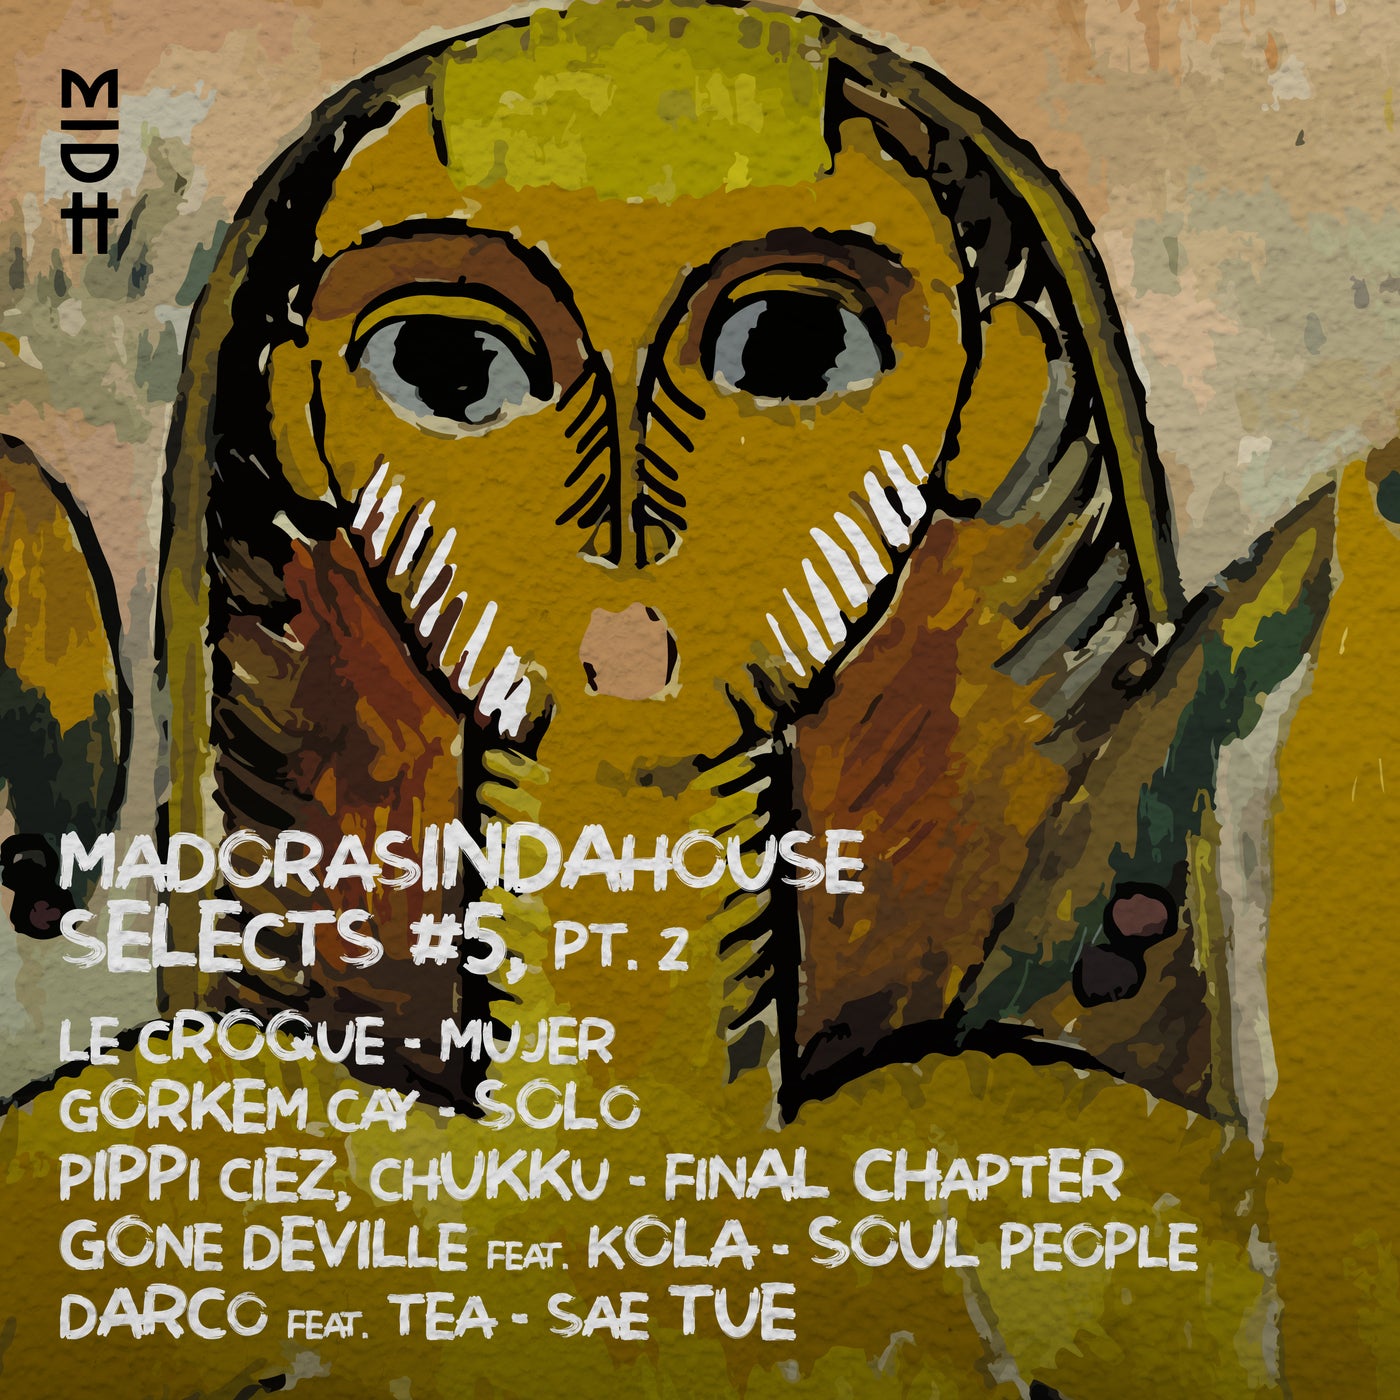 image cover: VA - Madorasindahouse Selects #5, Pt. 2 on Madorasindahouse Records